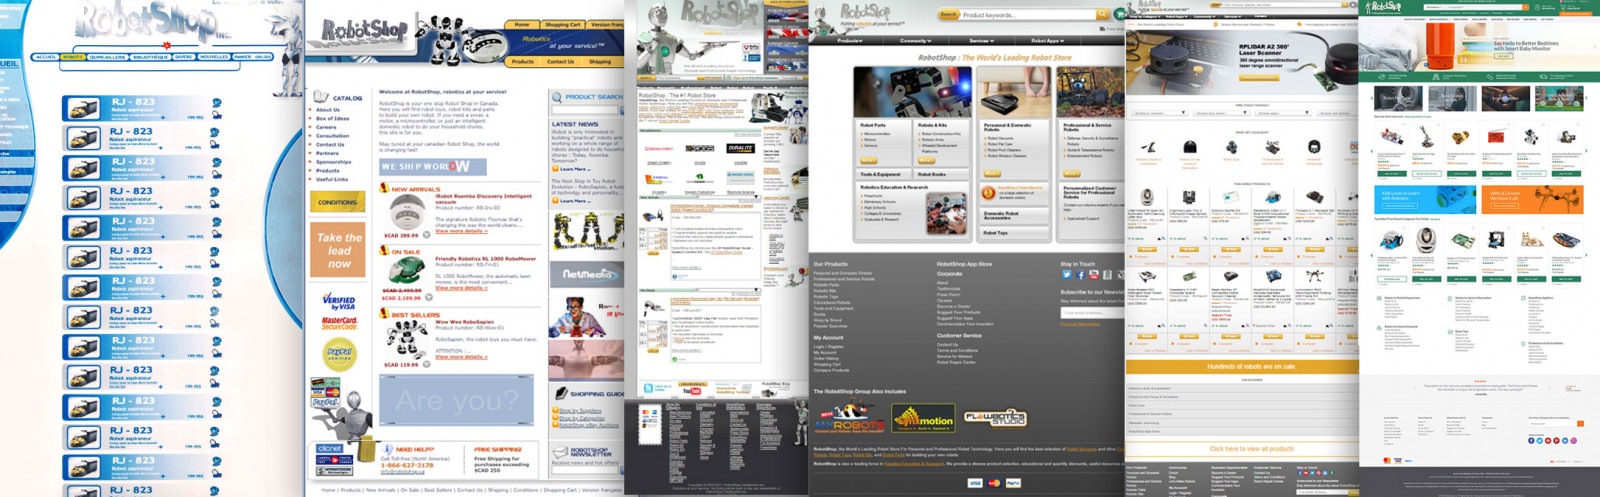 RobotShop's website designs since the beginning.